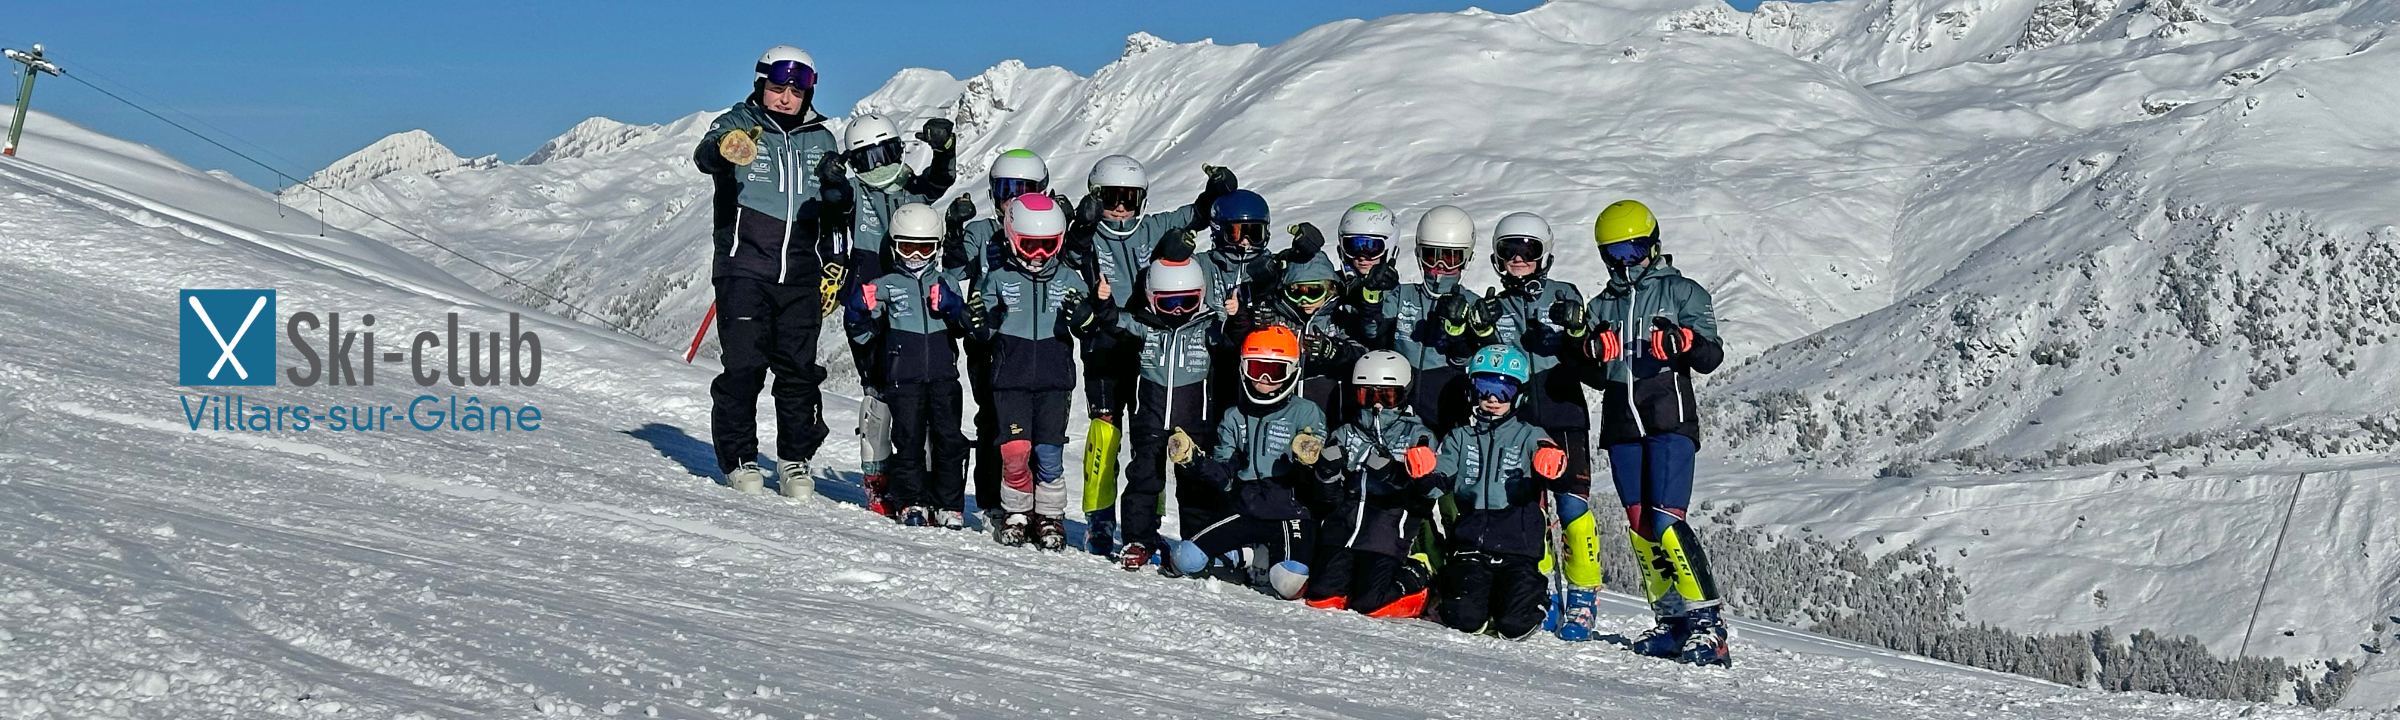 Ski-Club Villars-sur-Glâne